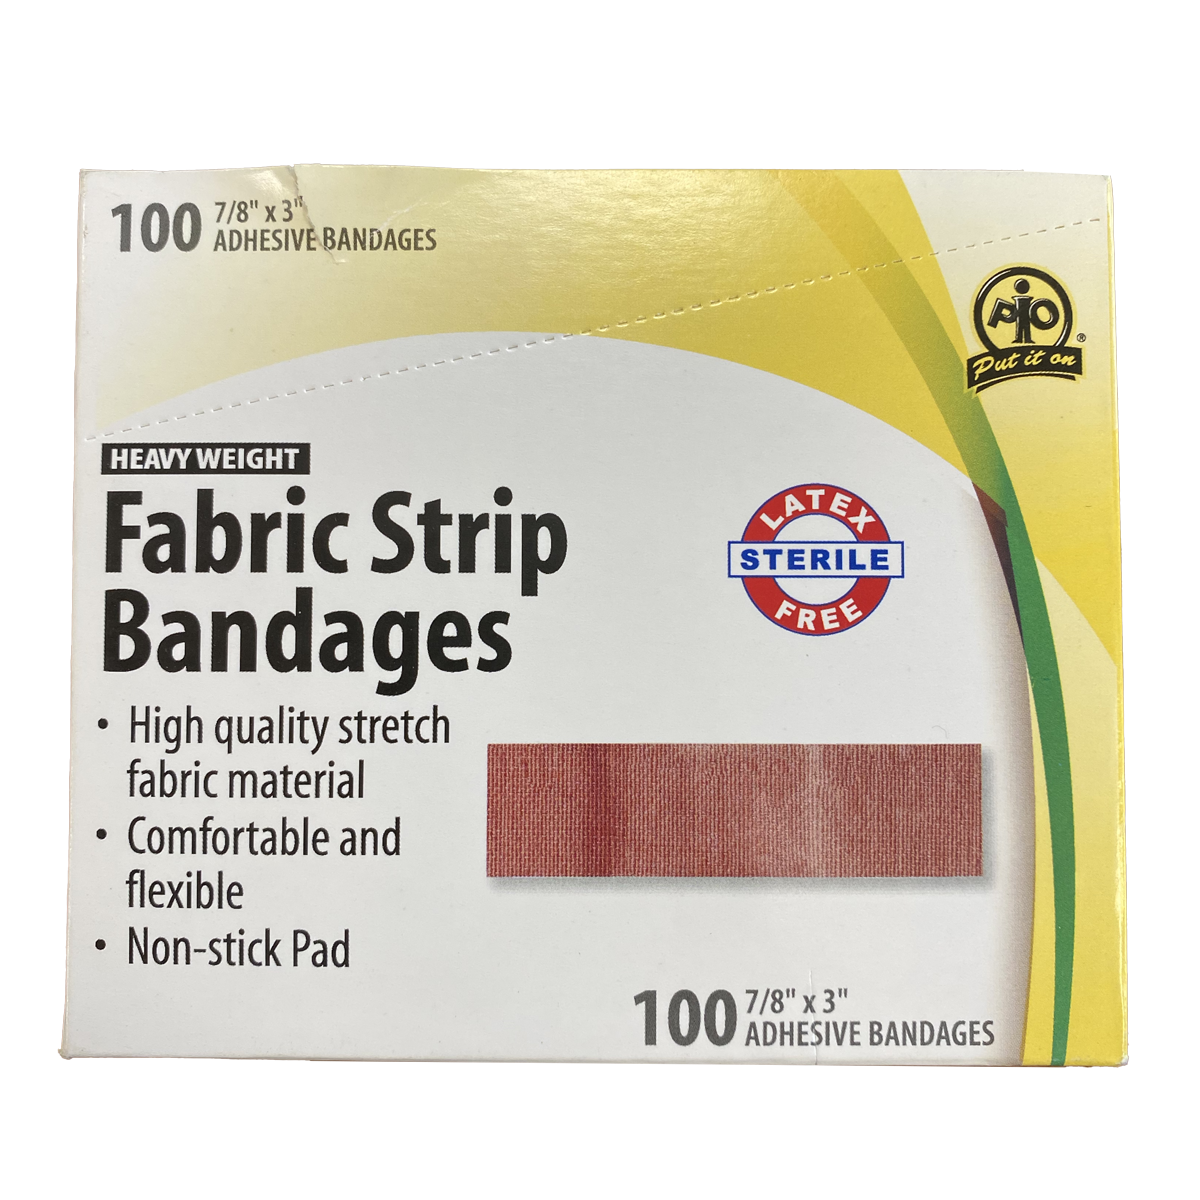 Fabric strip bandages